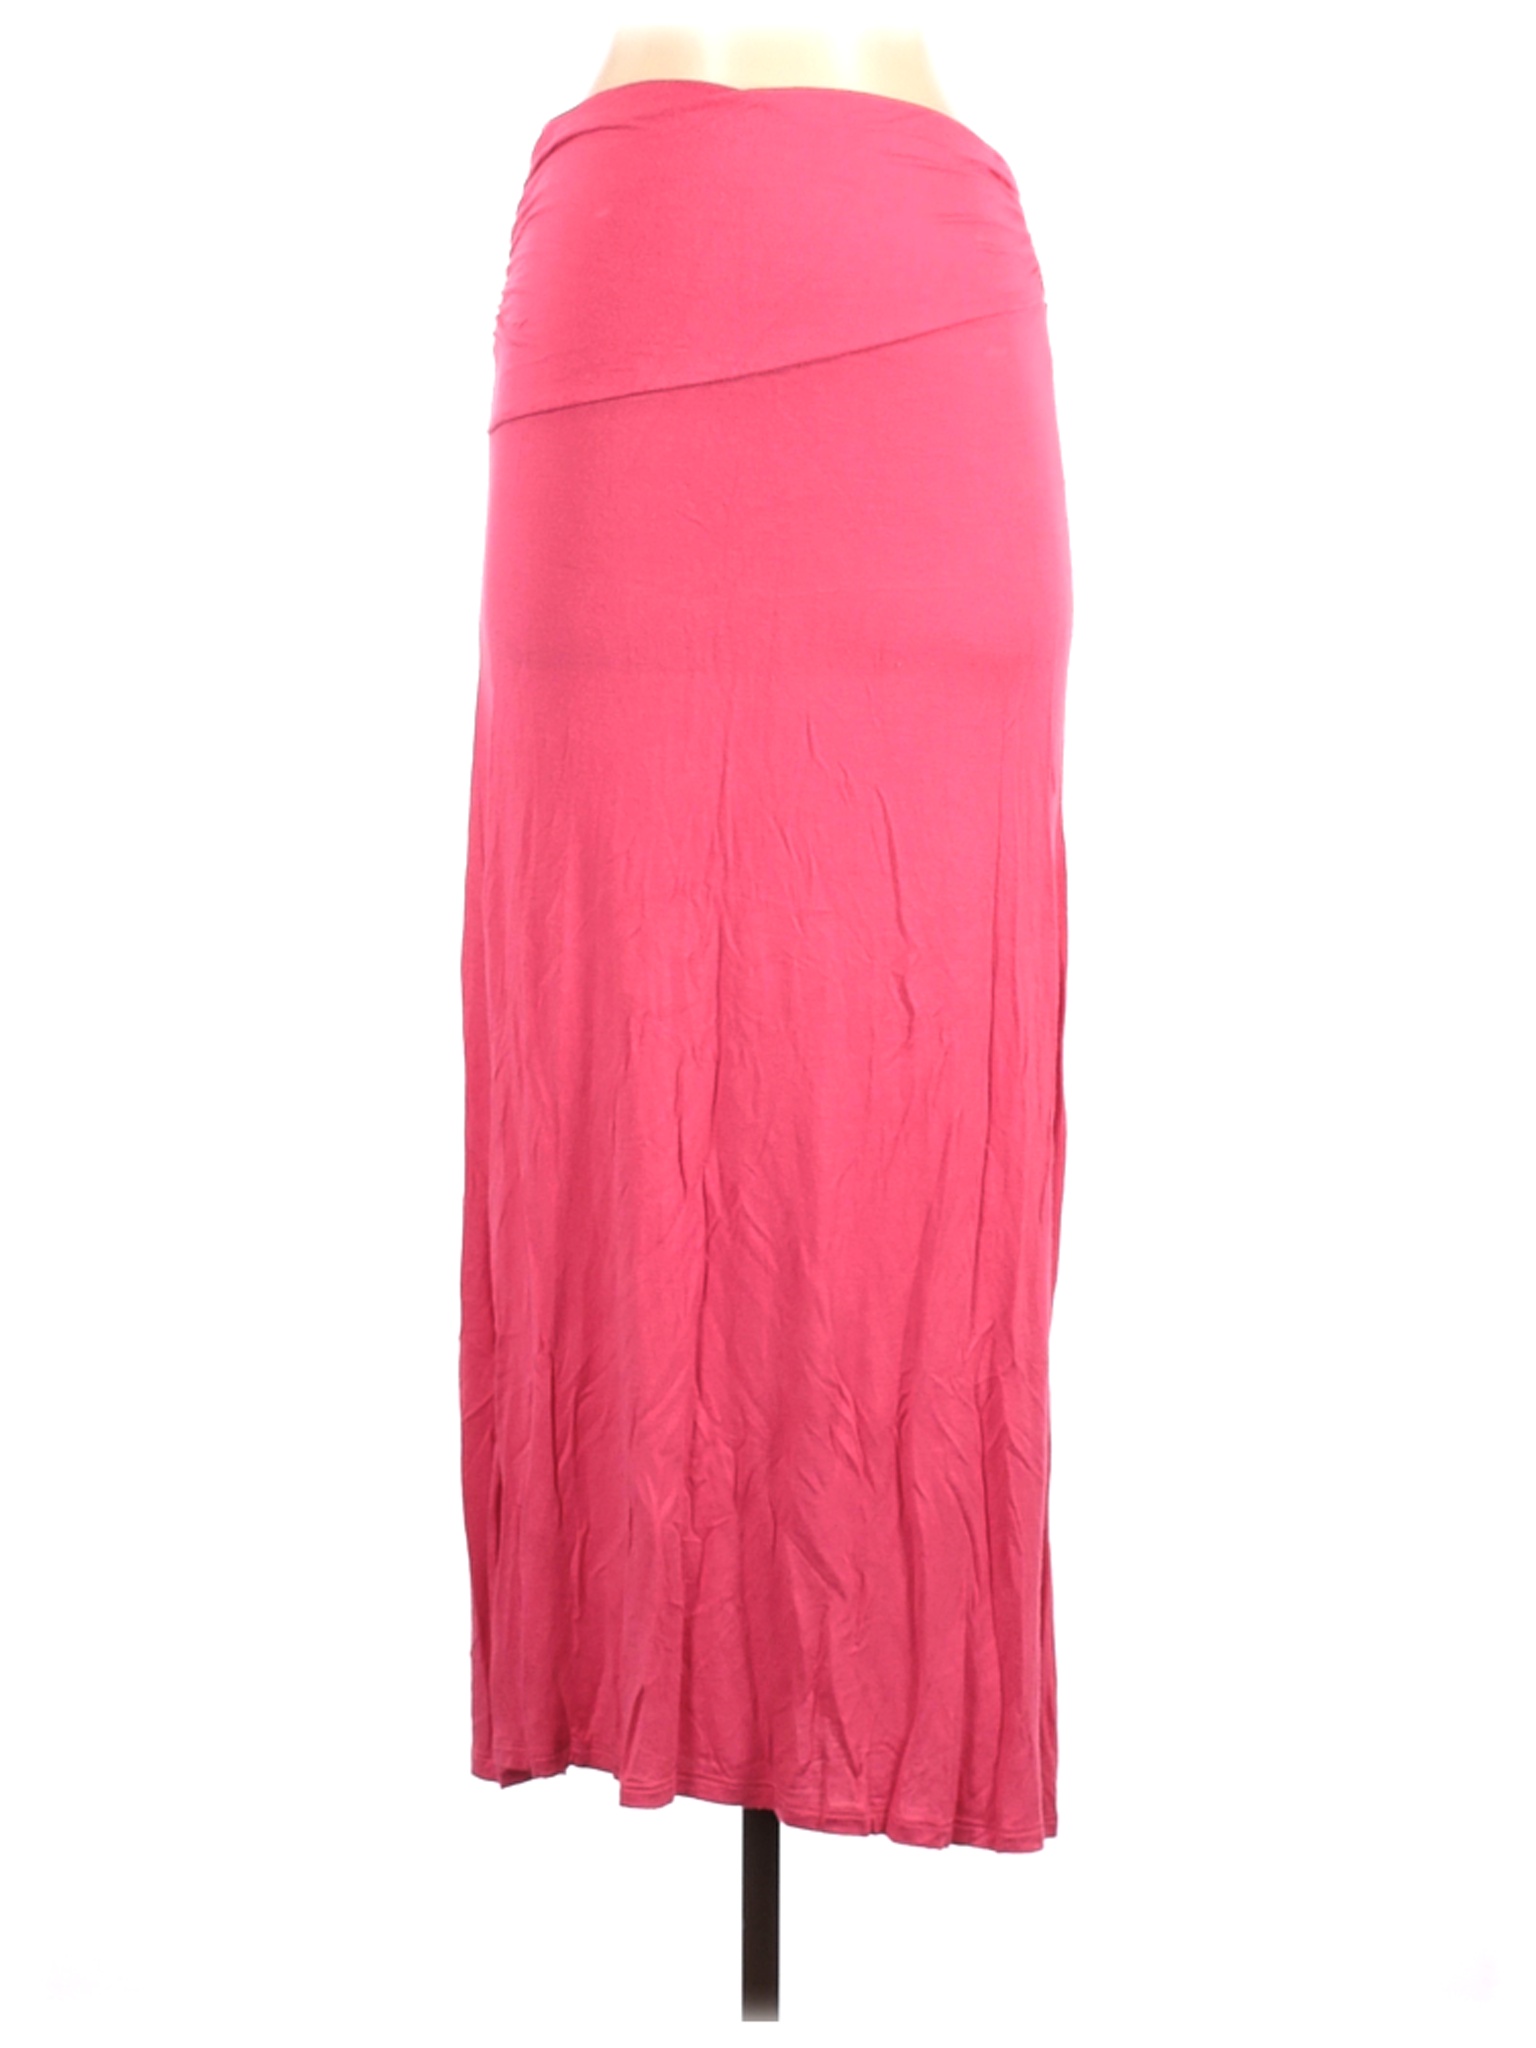 Sun & Moon Women Pink Casual Skirt S | eBay